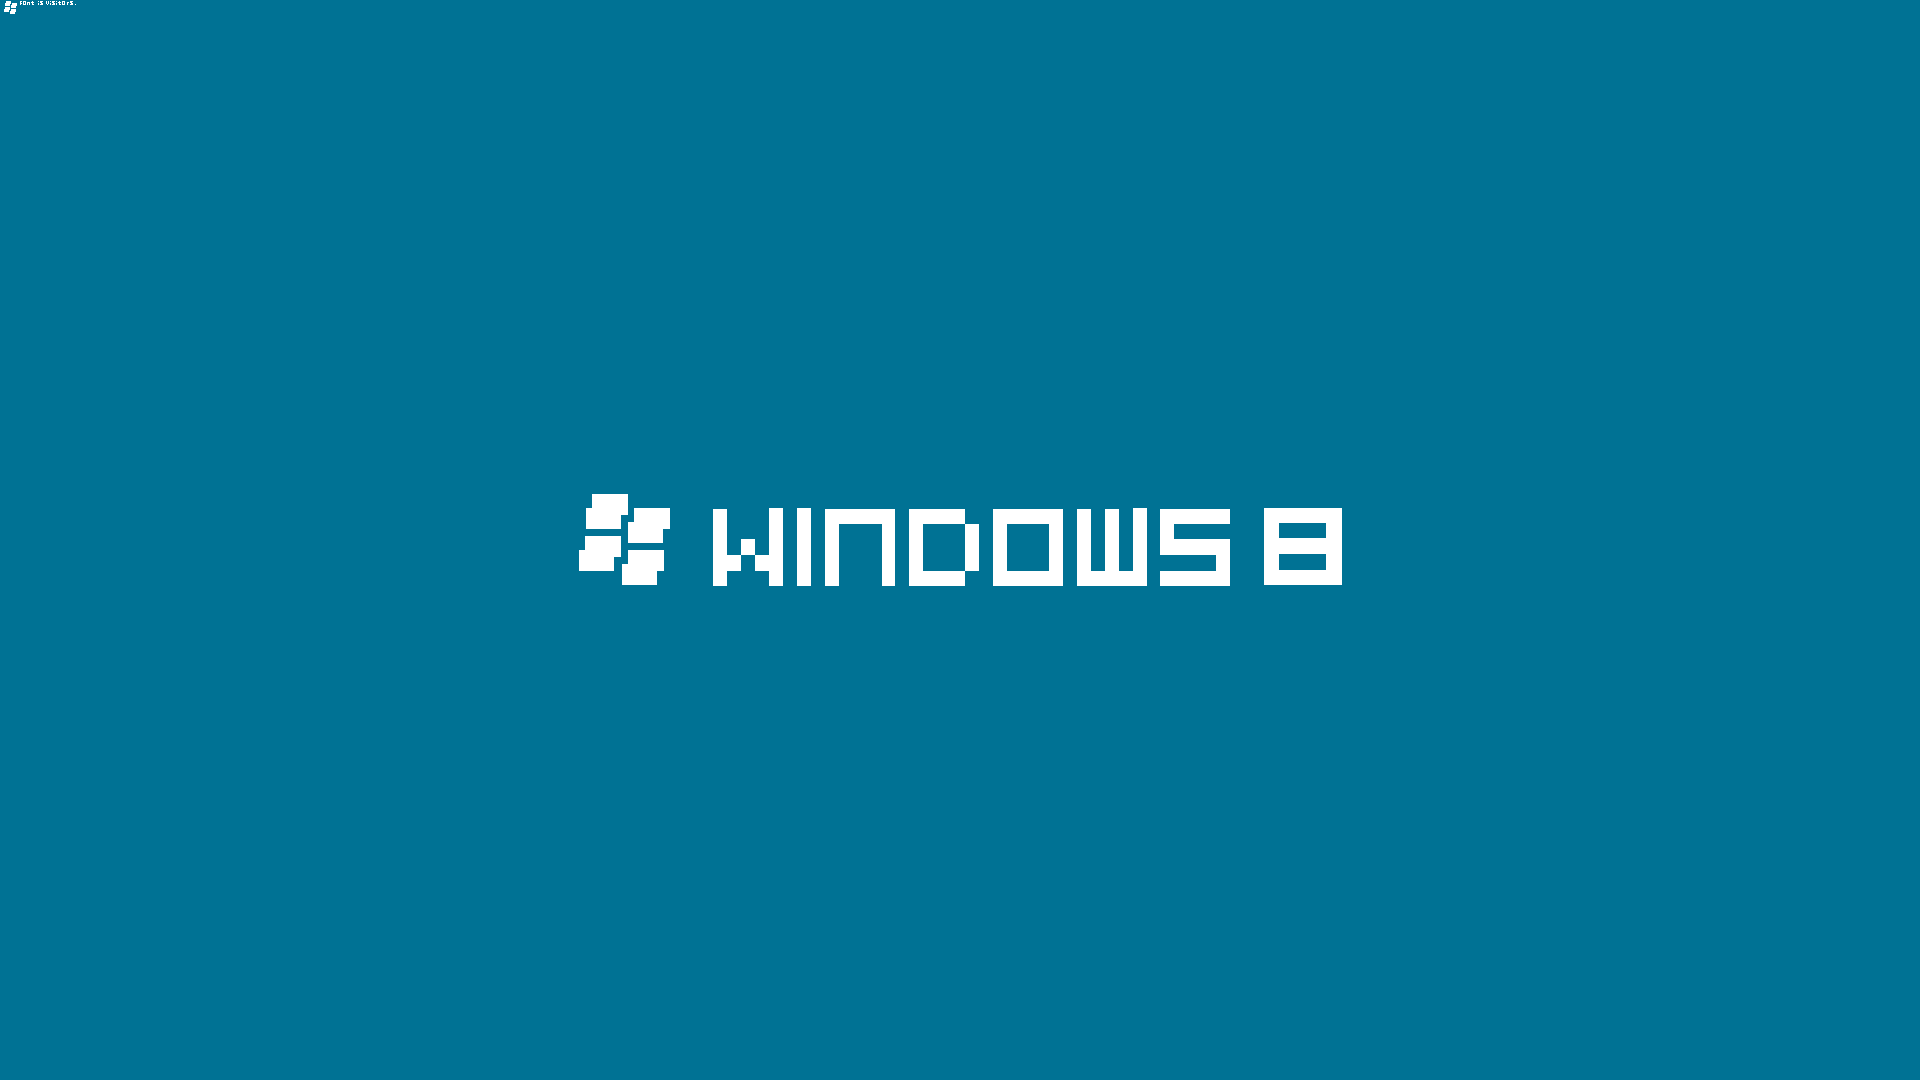 Windows 8 Logo Wallpaper, Most Beautiful Wallpaper of Windows 8